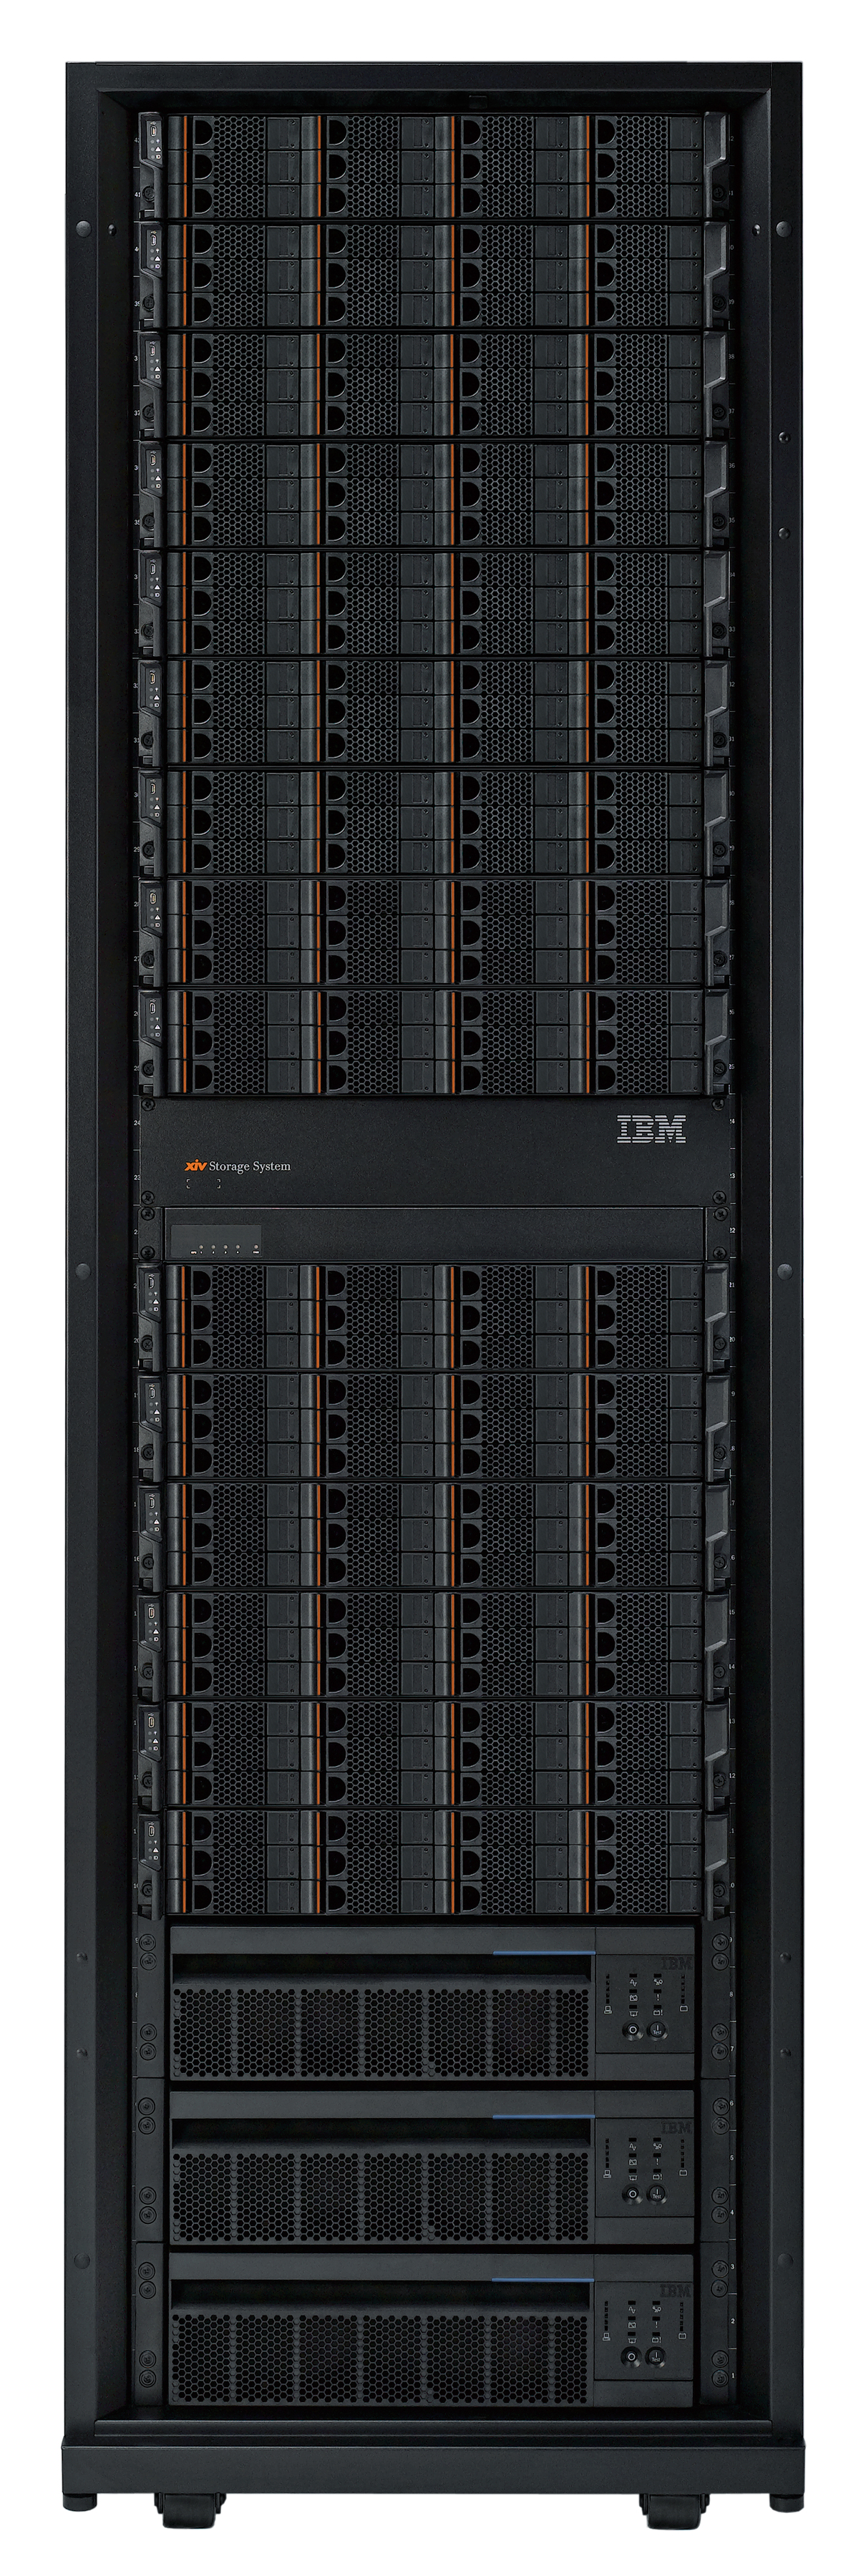 IBM XIV. Ibm 4